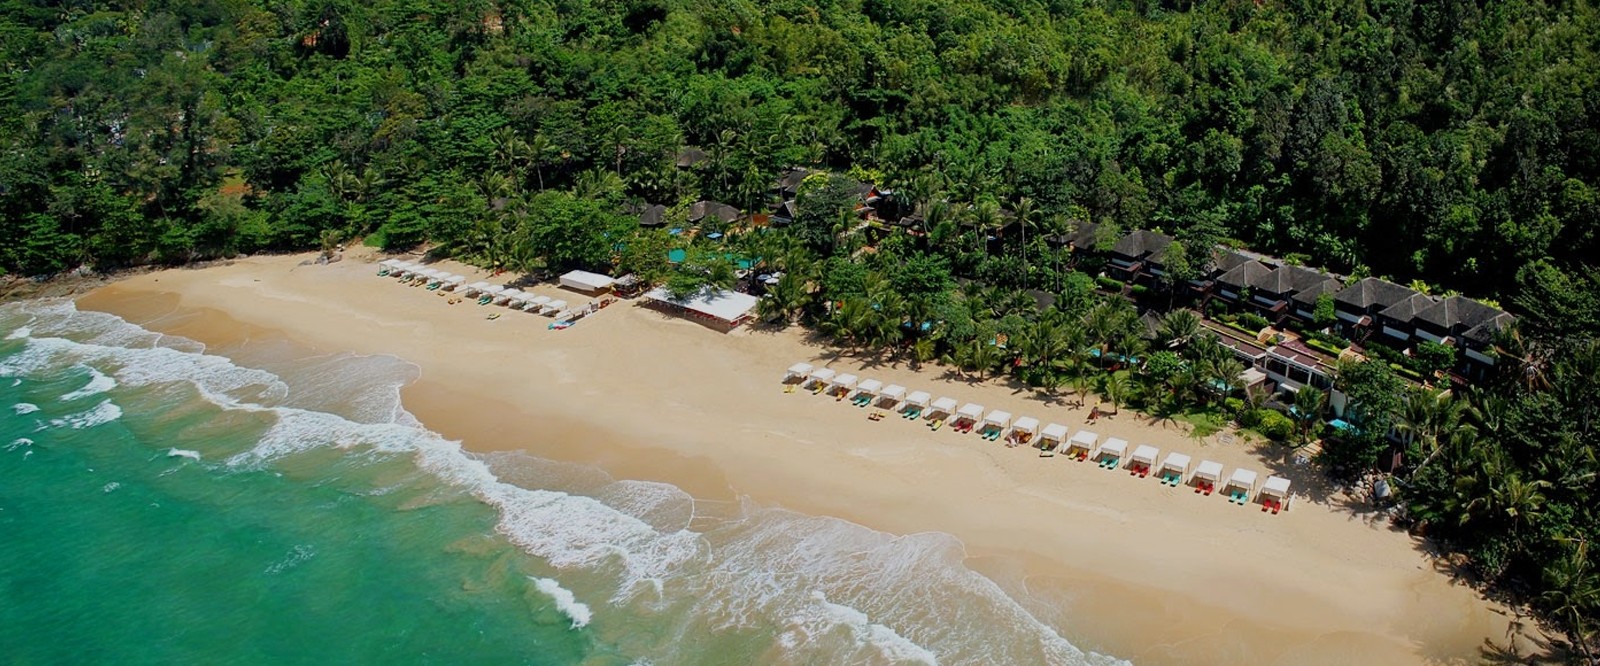 andaman white beach thailand honeymoon packages header